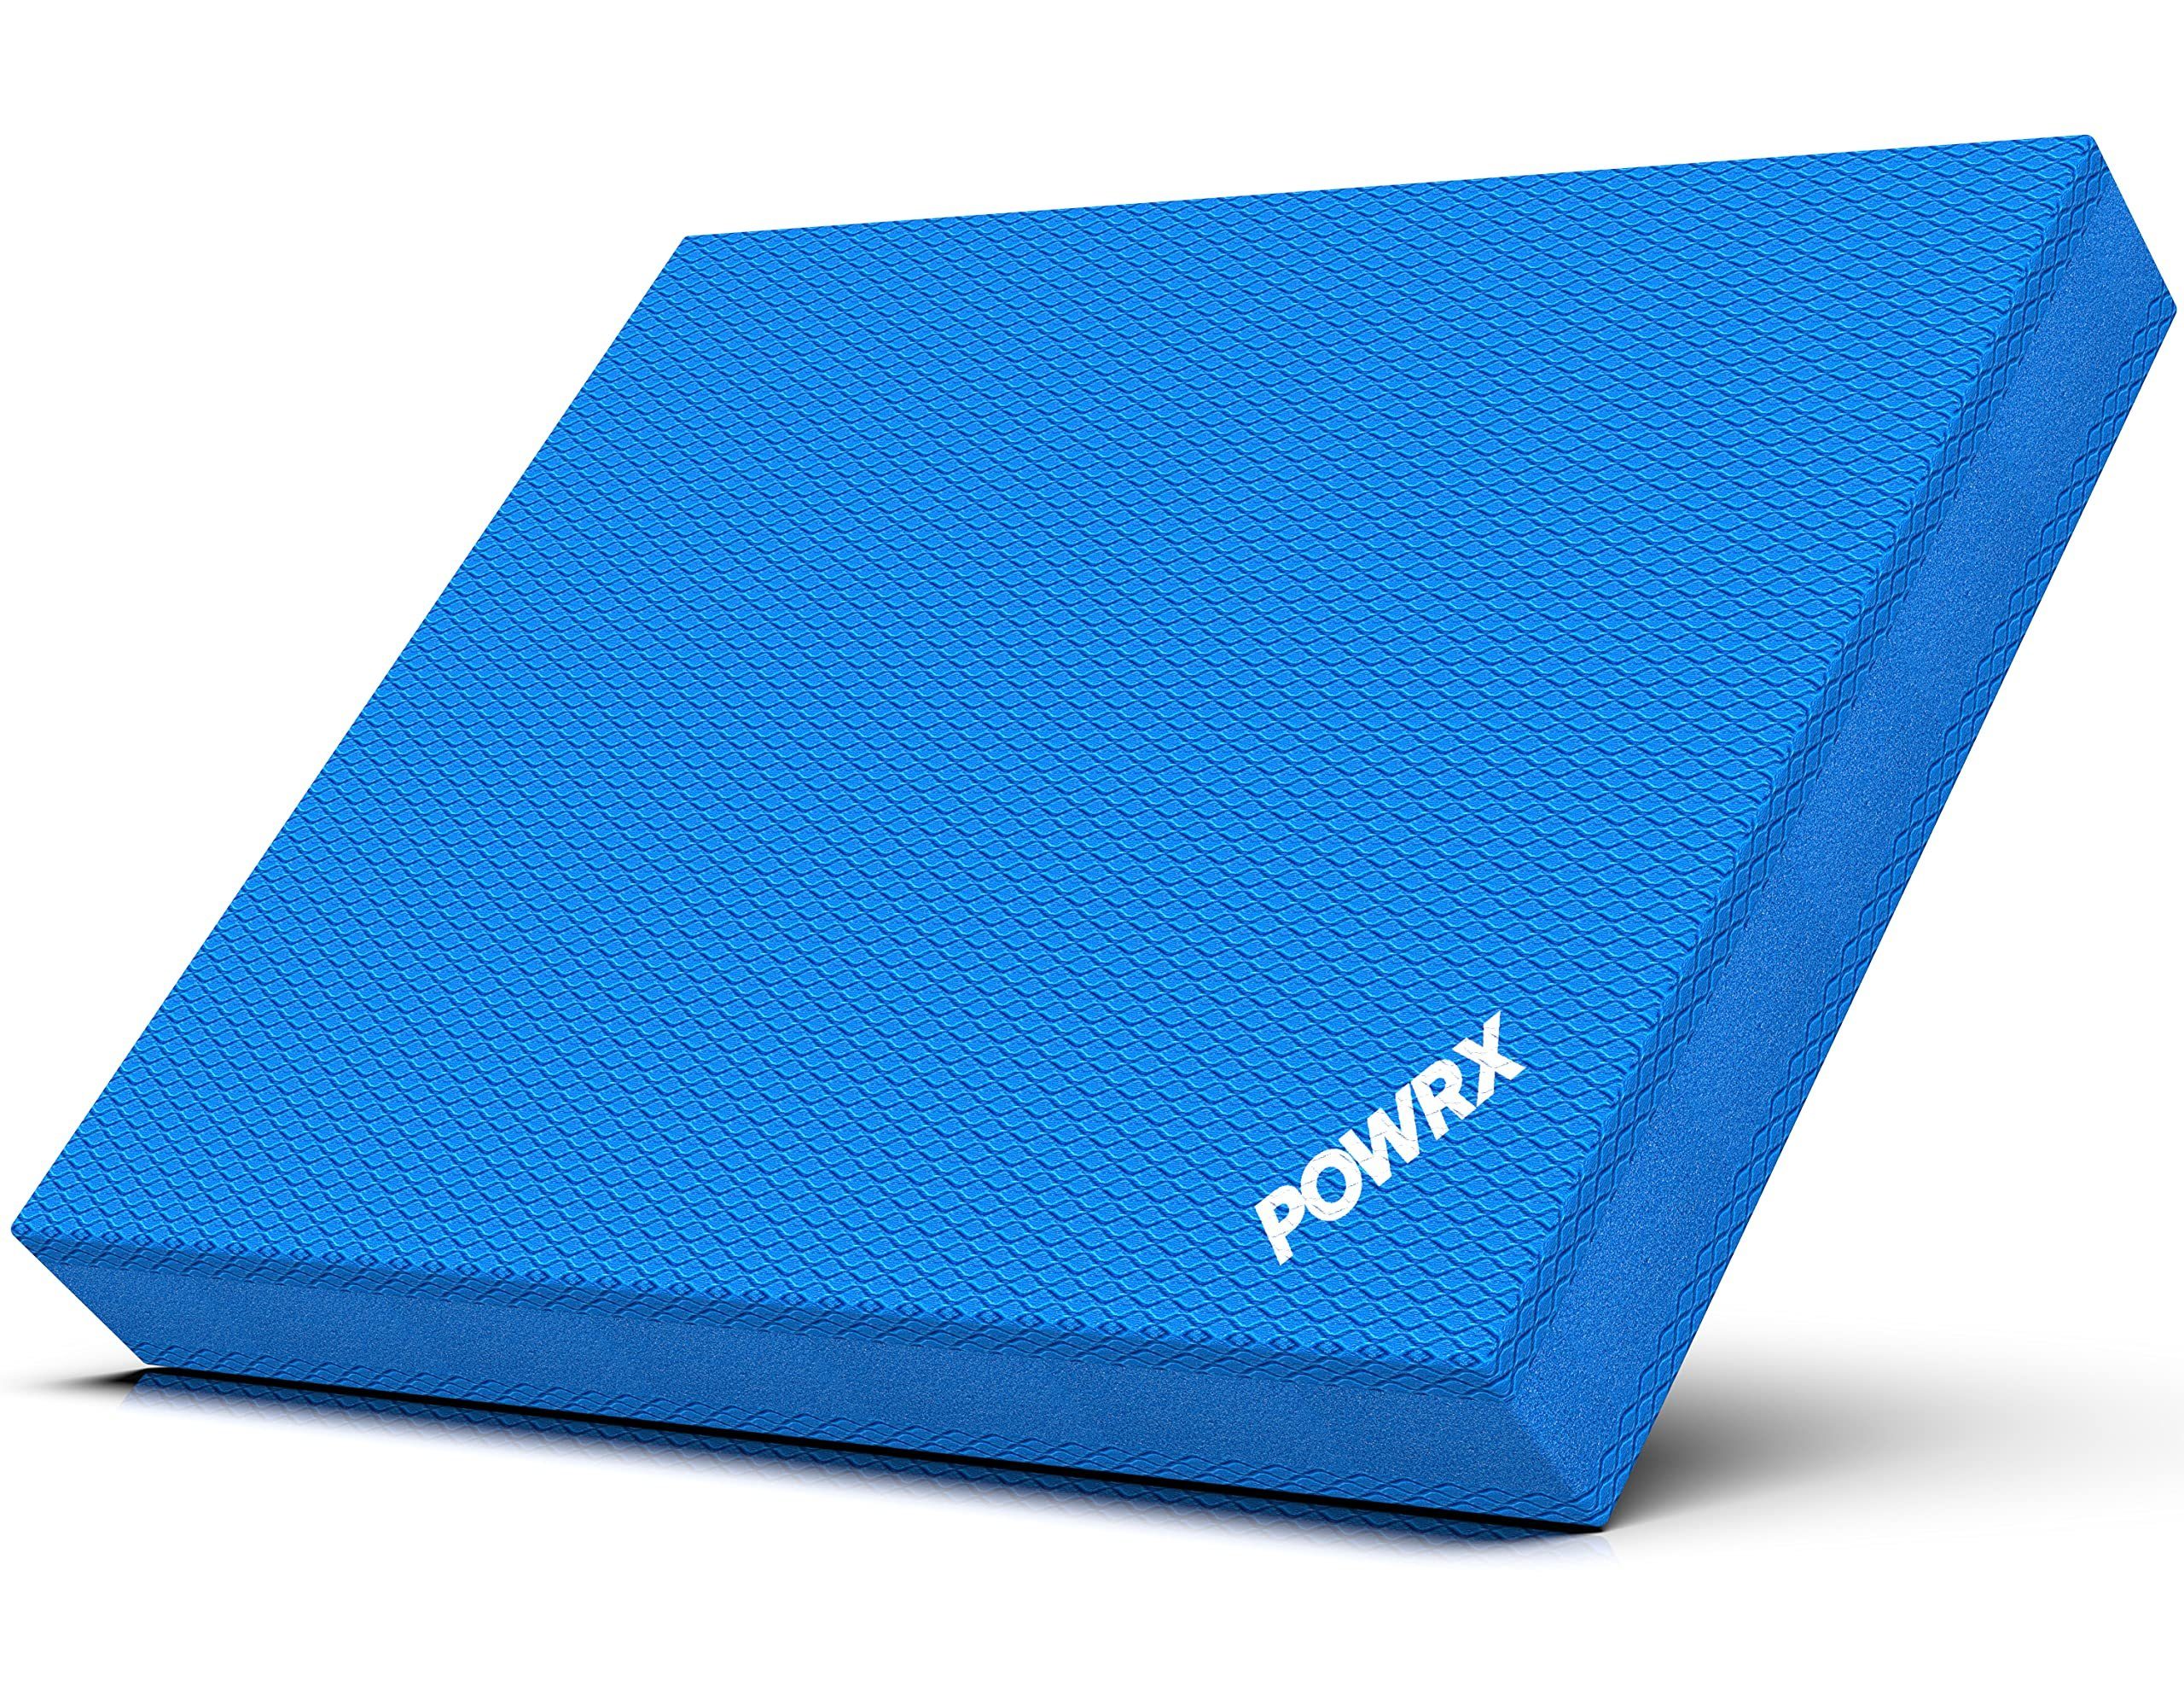 POWRX Balance Pad Balance-Pad 40x34x5 Cm) Training, (40X34X5 Knigsblau für cm